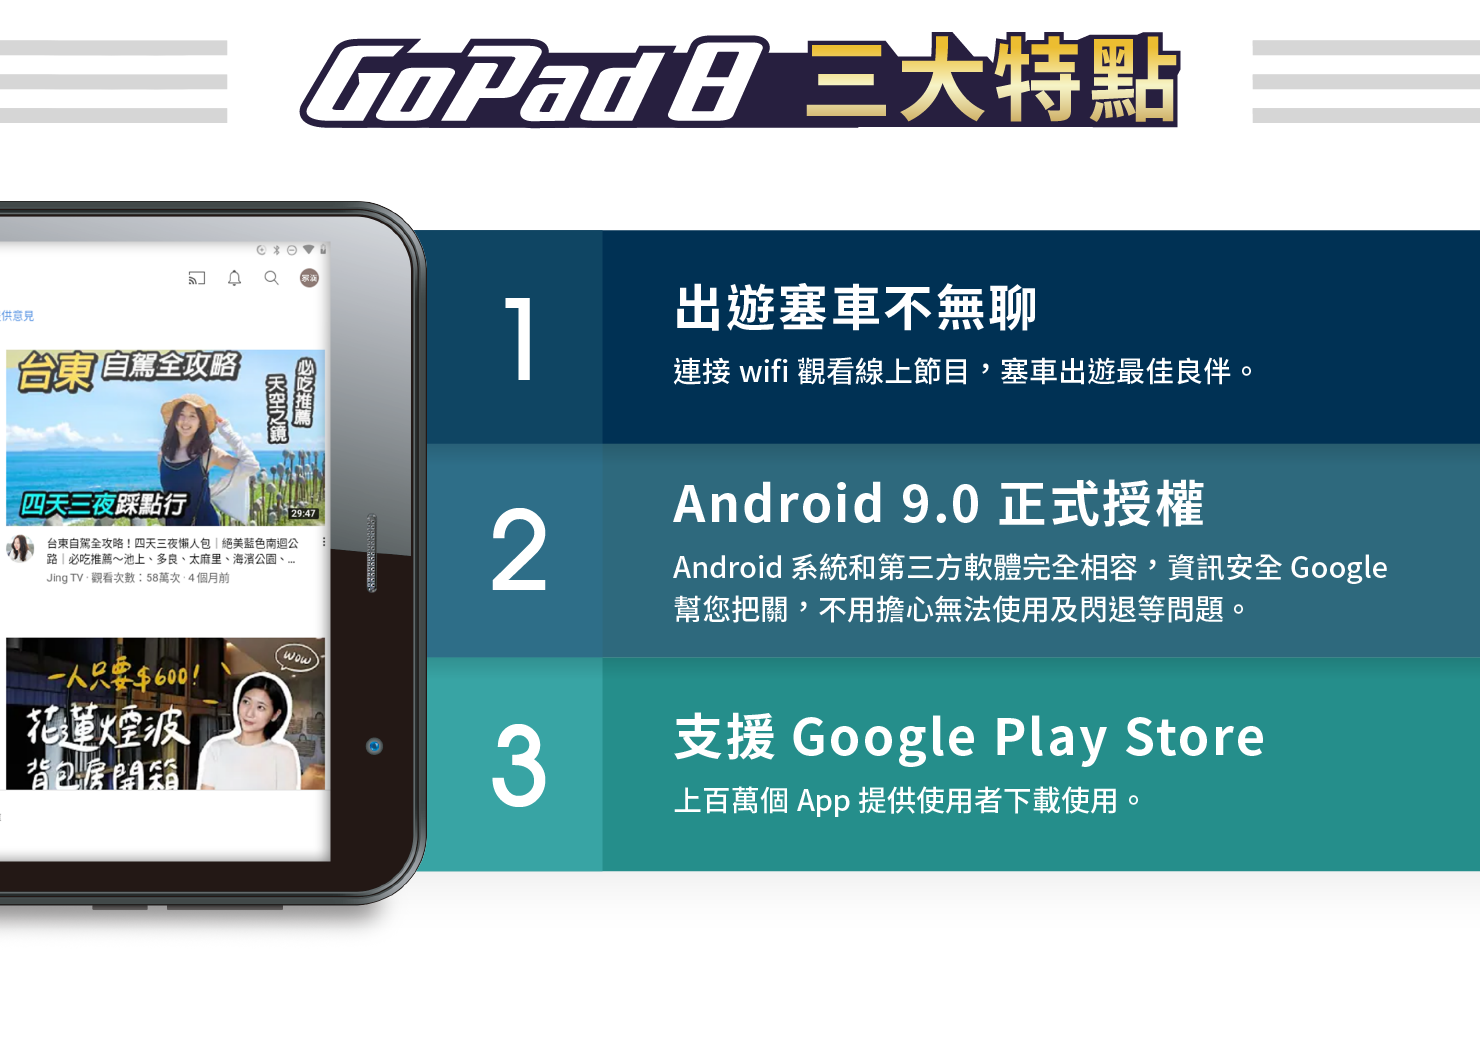 GoPad 8 三大特點: 出遊塞車不無聊、Android 9.0 正式授權、支援Google Play Store